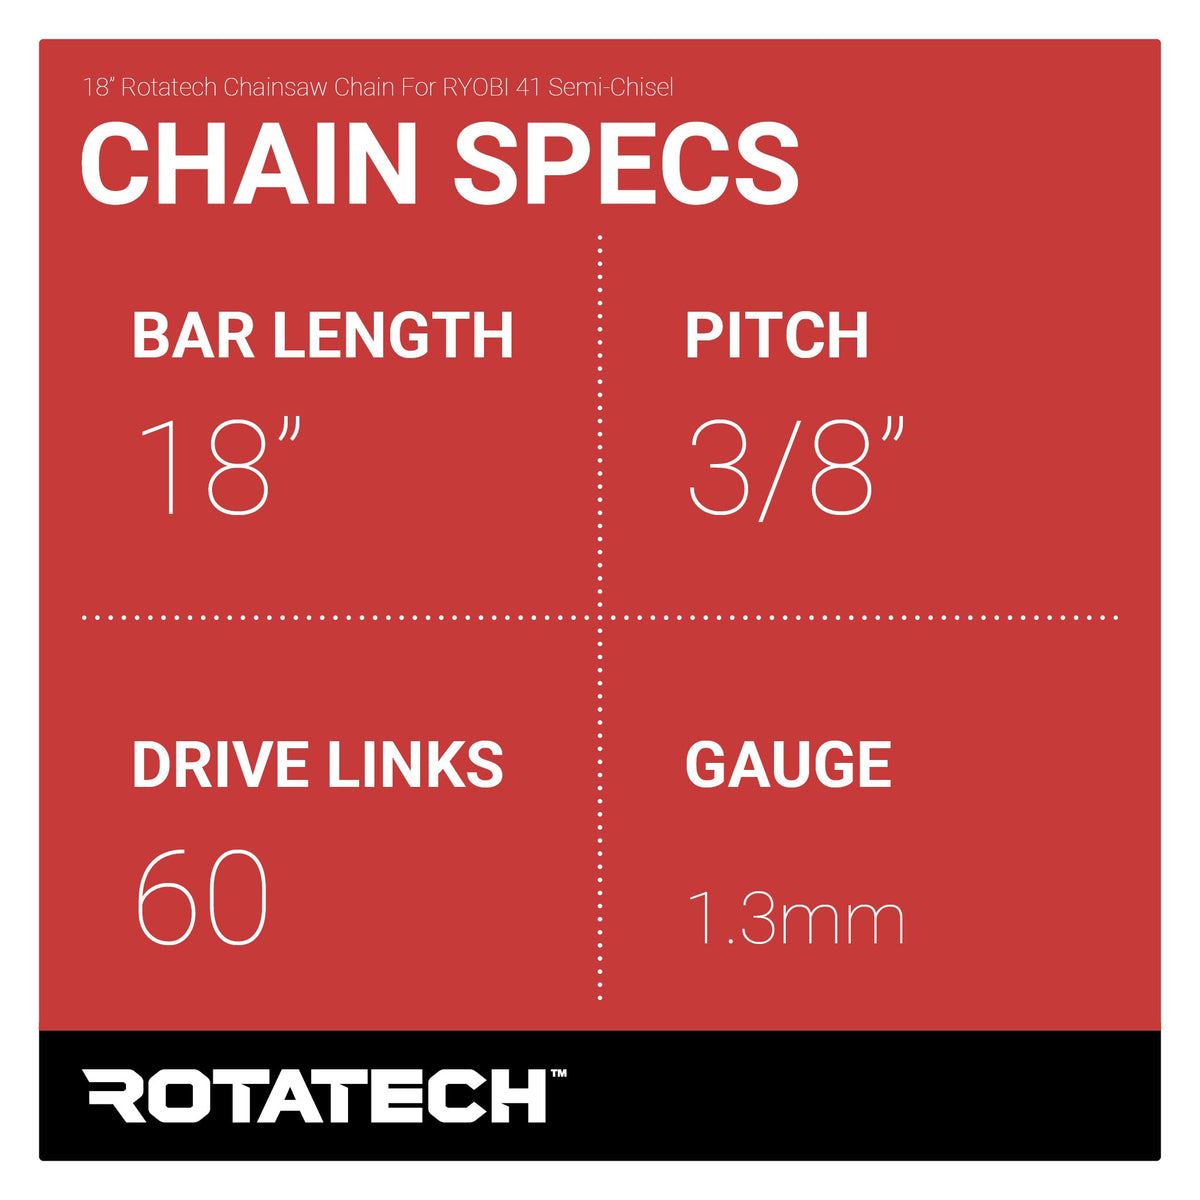 18" Rotatech Chainsaw Chain For RYOBI 41 Semi-Chisel Chain Specs